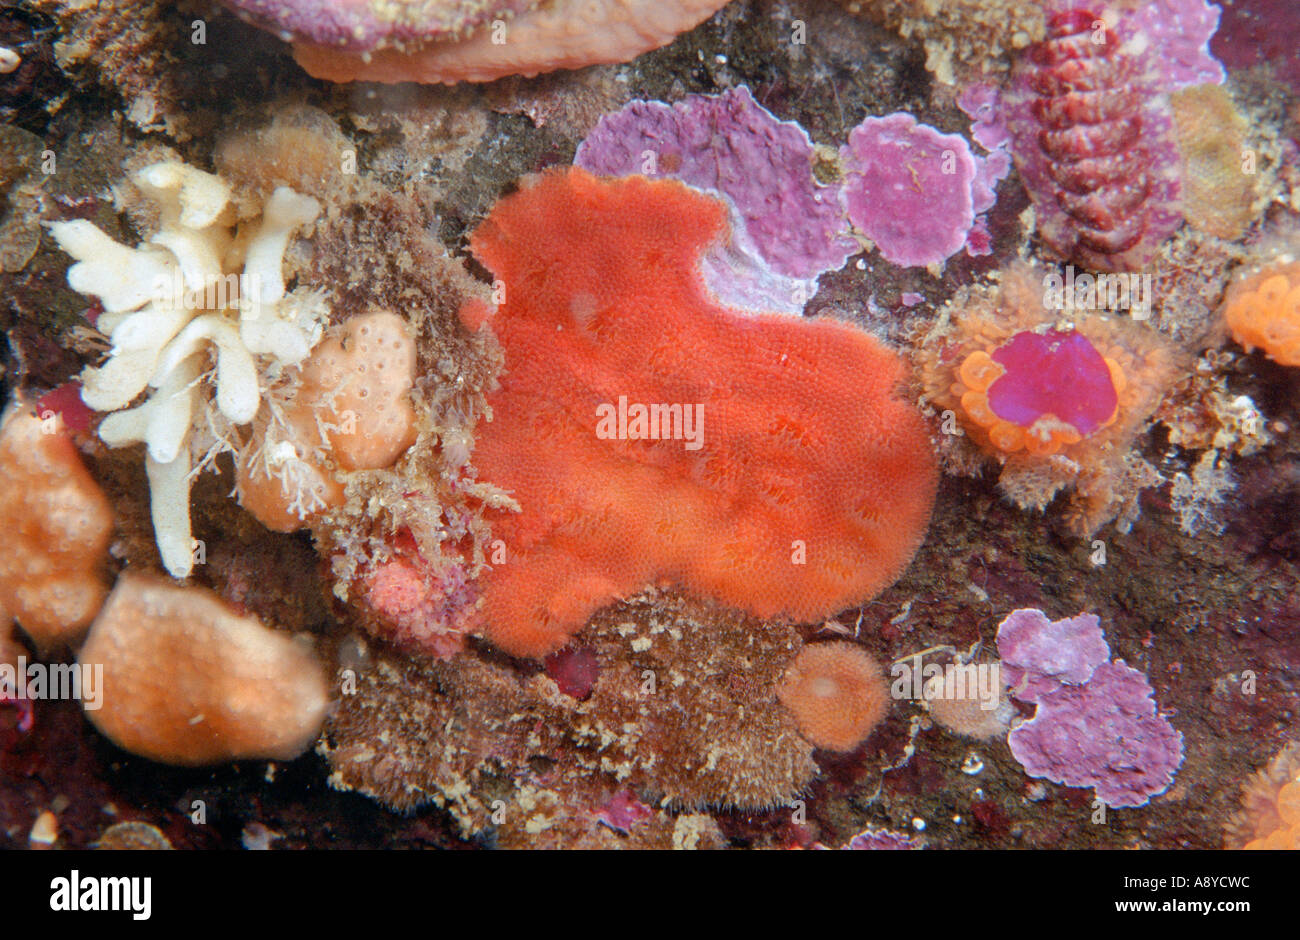 Marine invertebrates flat orange colony Bryozoa, colonial ascidian Aplidium, white calcareous sponge and coralline algae Pacific Stock Photo